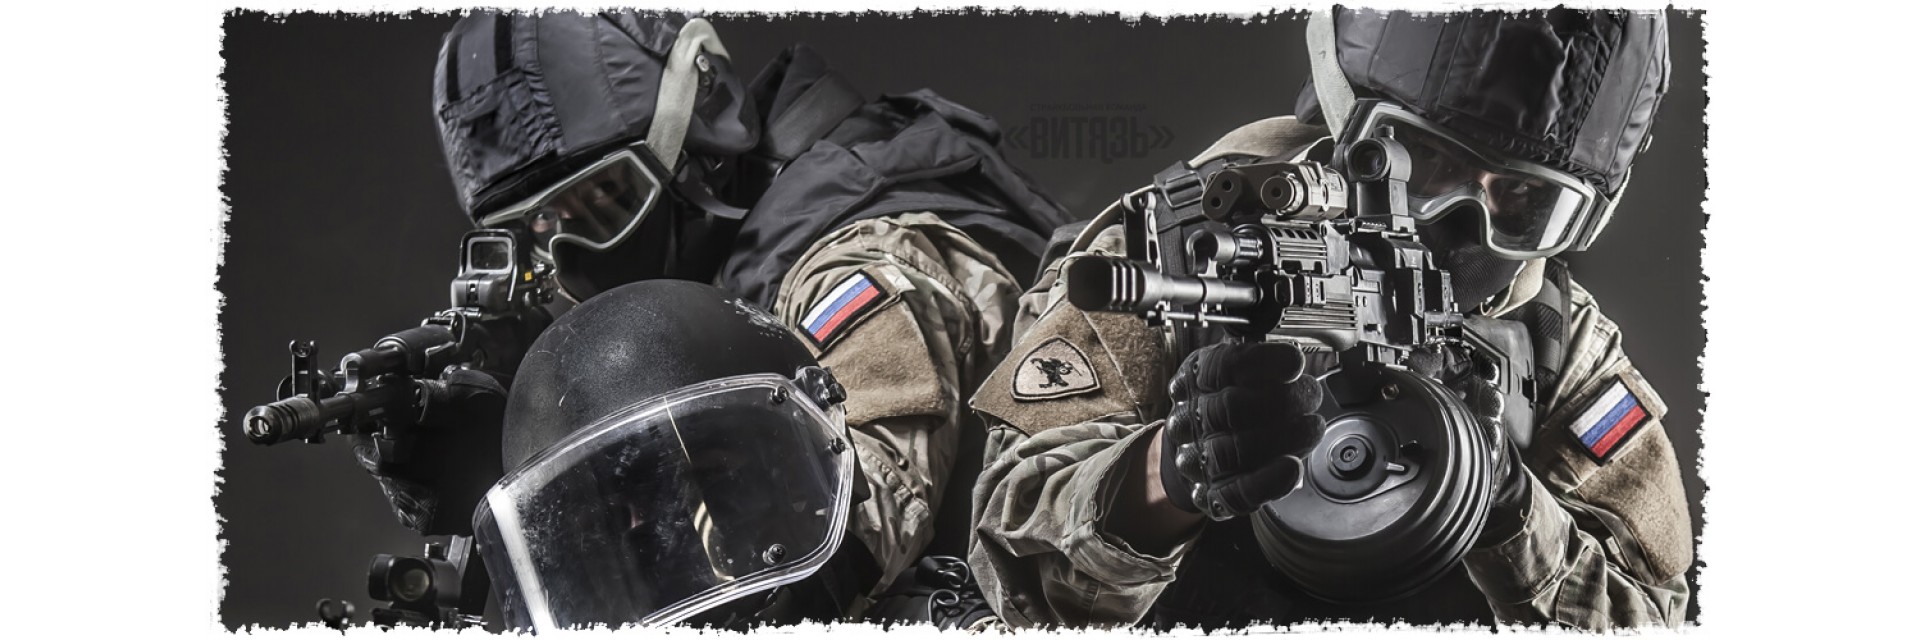 Militare Dell'esercito Special Ops Tactical petto rig Gilet Nero Airsoft M51611057-BK 